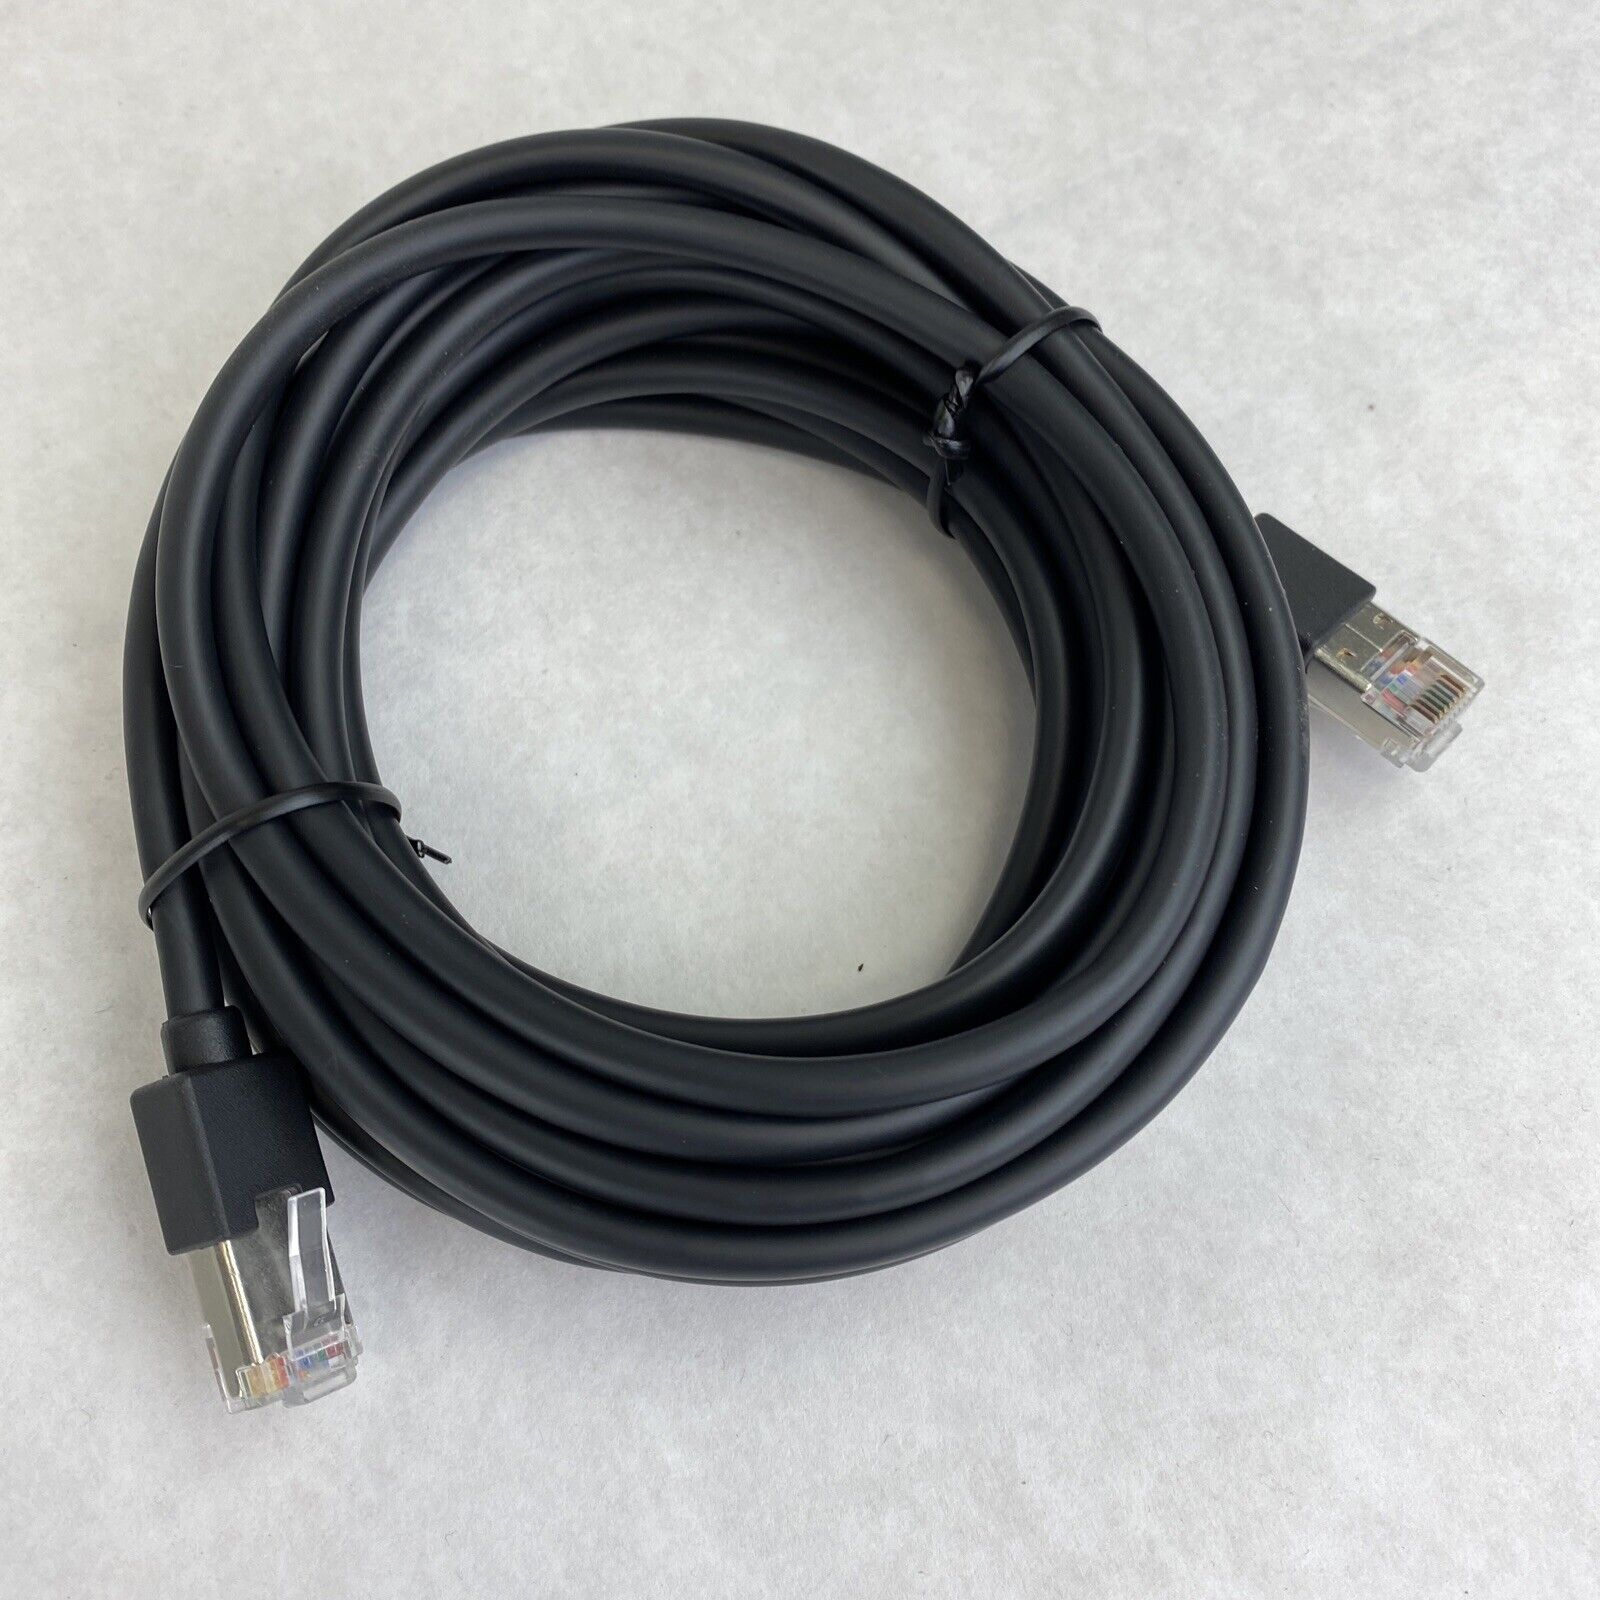 Lot of 5 RJ45 Ethernet Cat5e CAT5 LAN network cable BLACK 5m